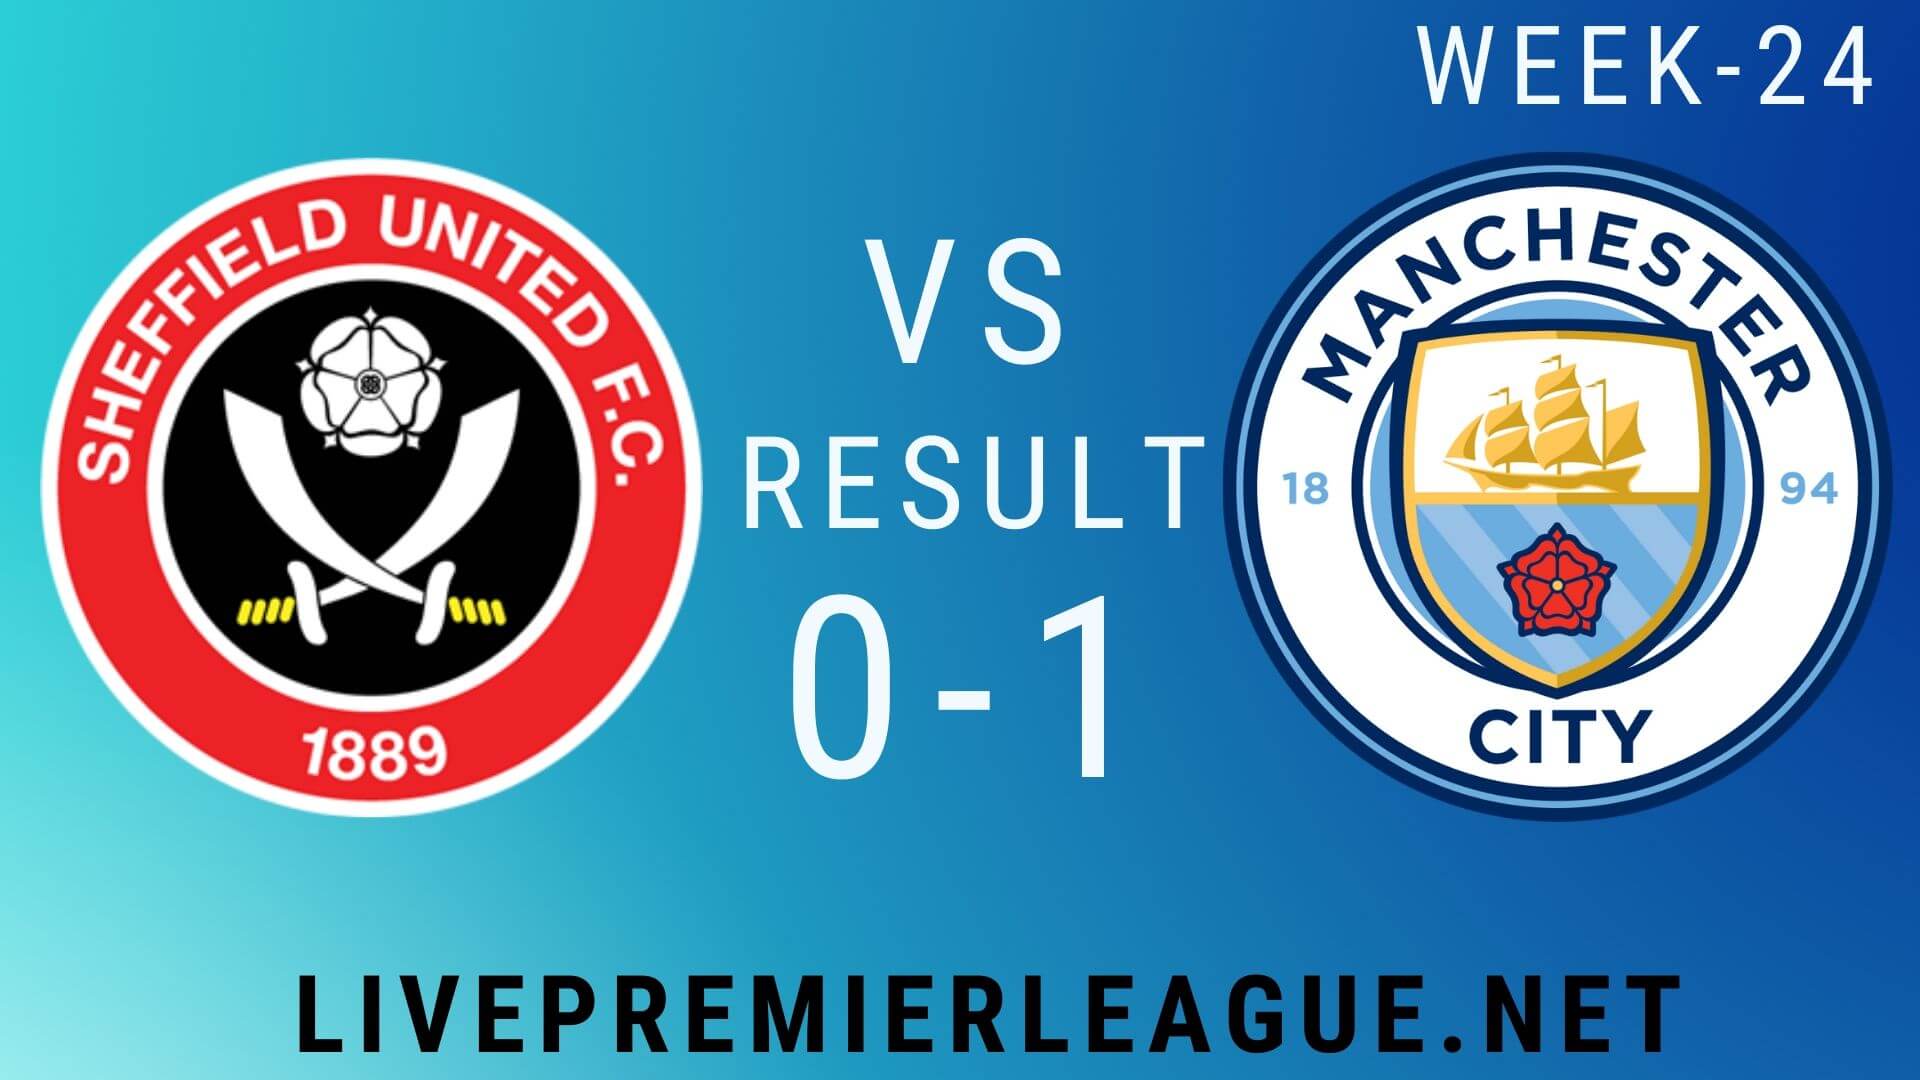 Sheffield United Vs Manchester City | Week 24 Result 2020